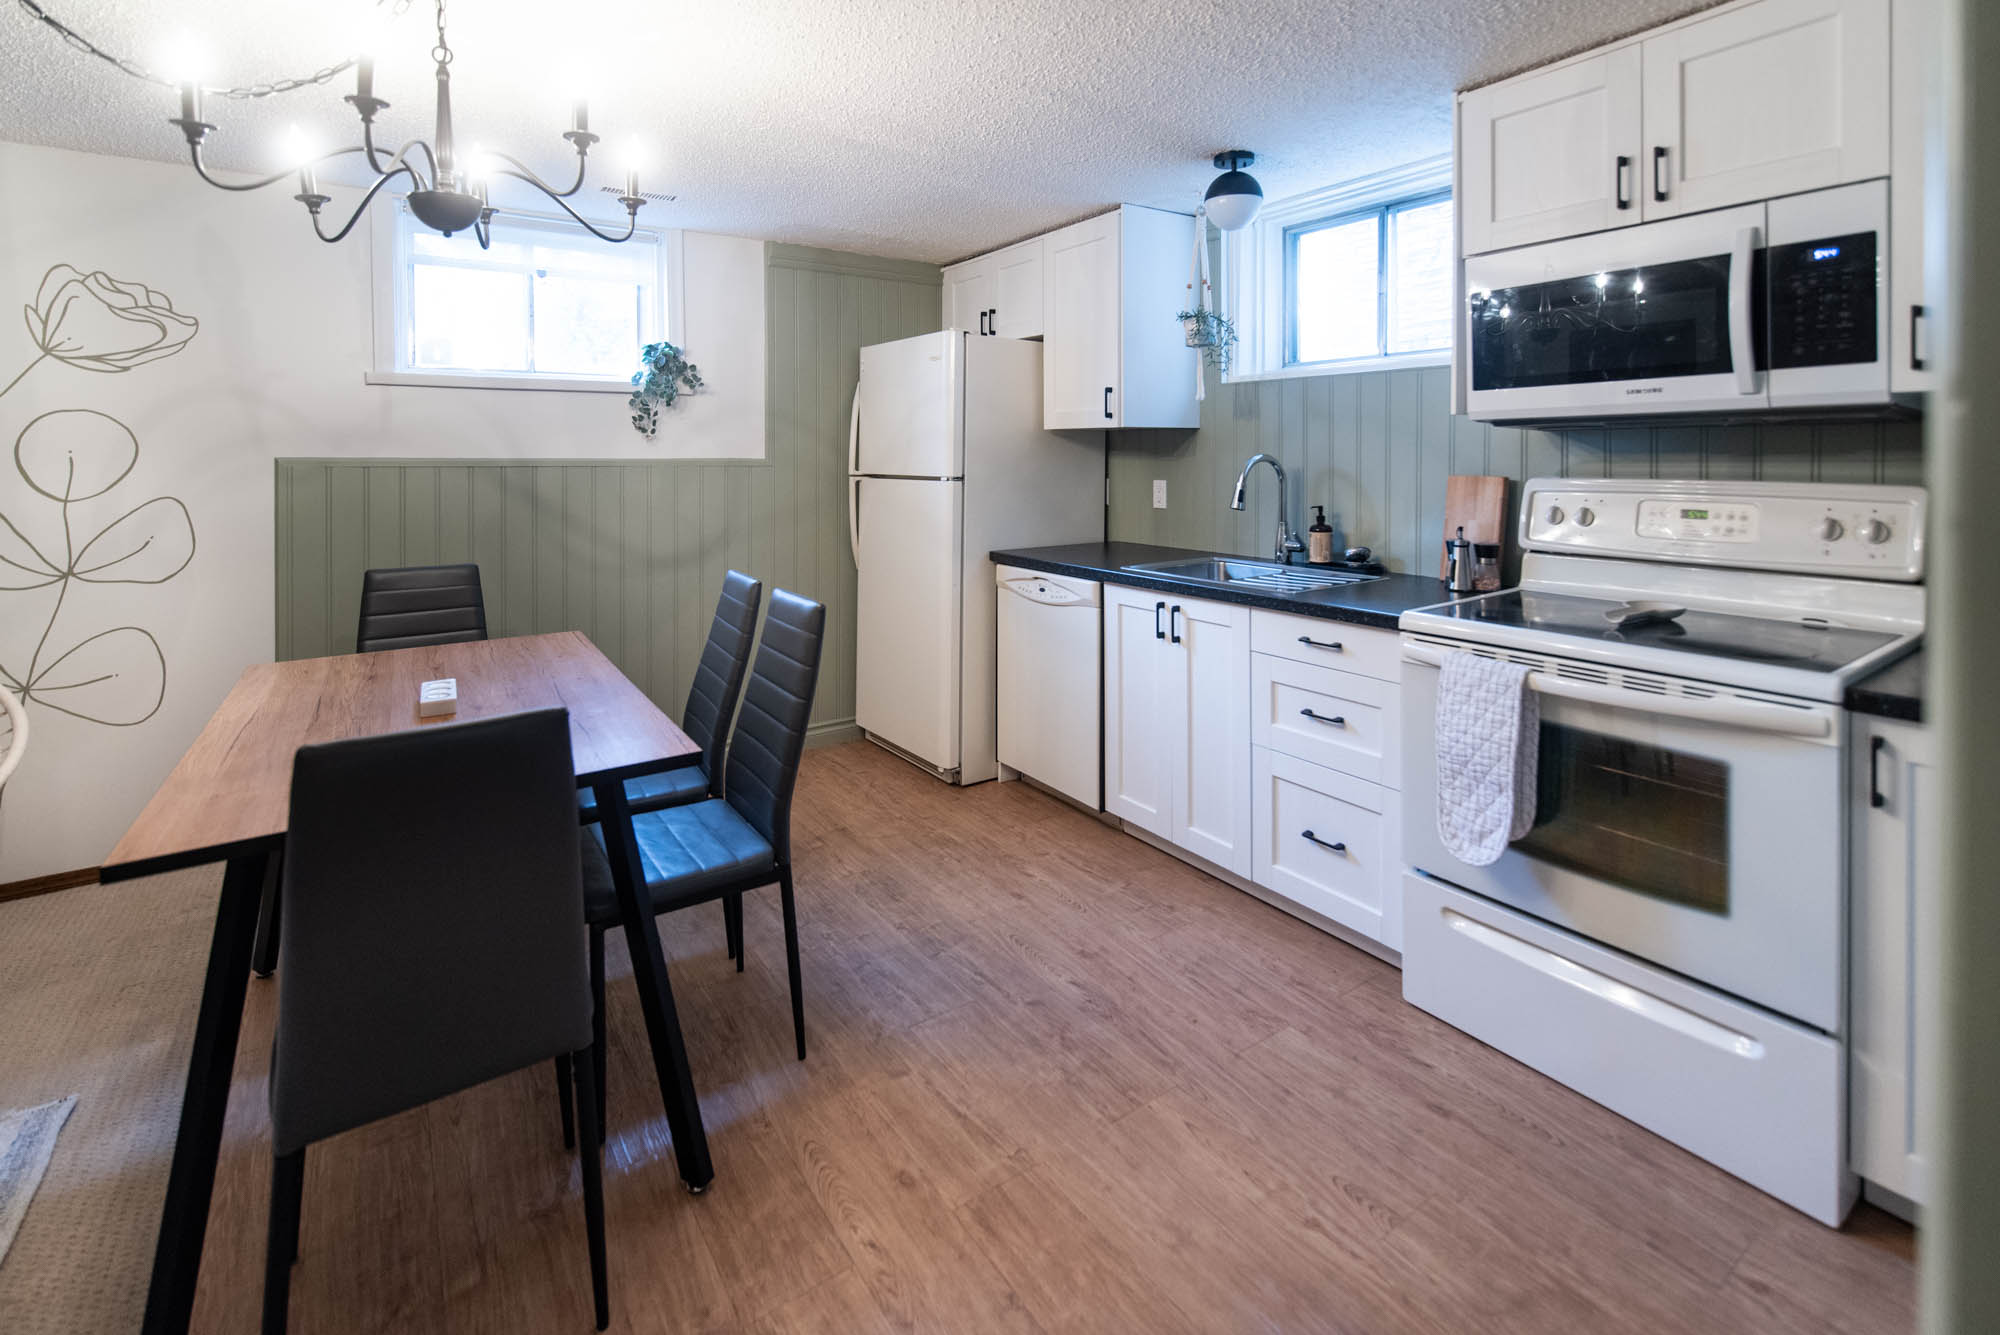 Farmhouse basement suite kitchen with green beadboard as backsplash